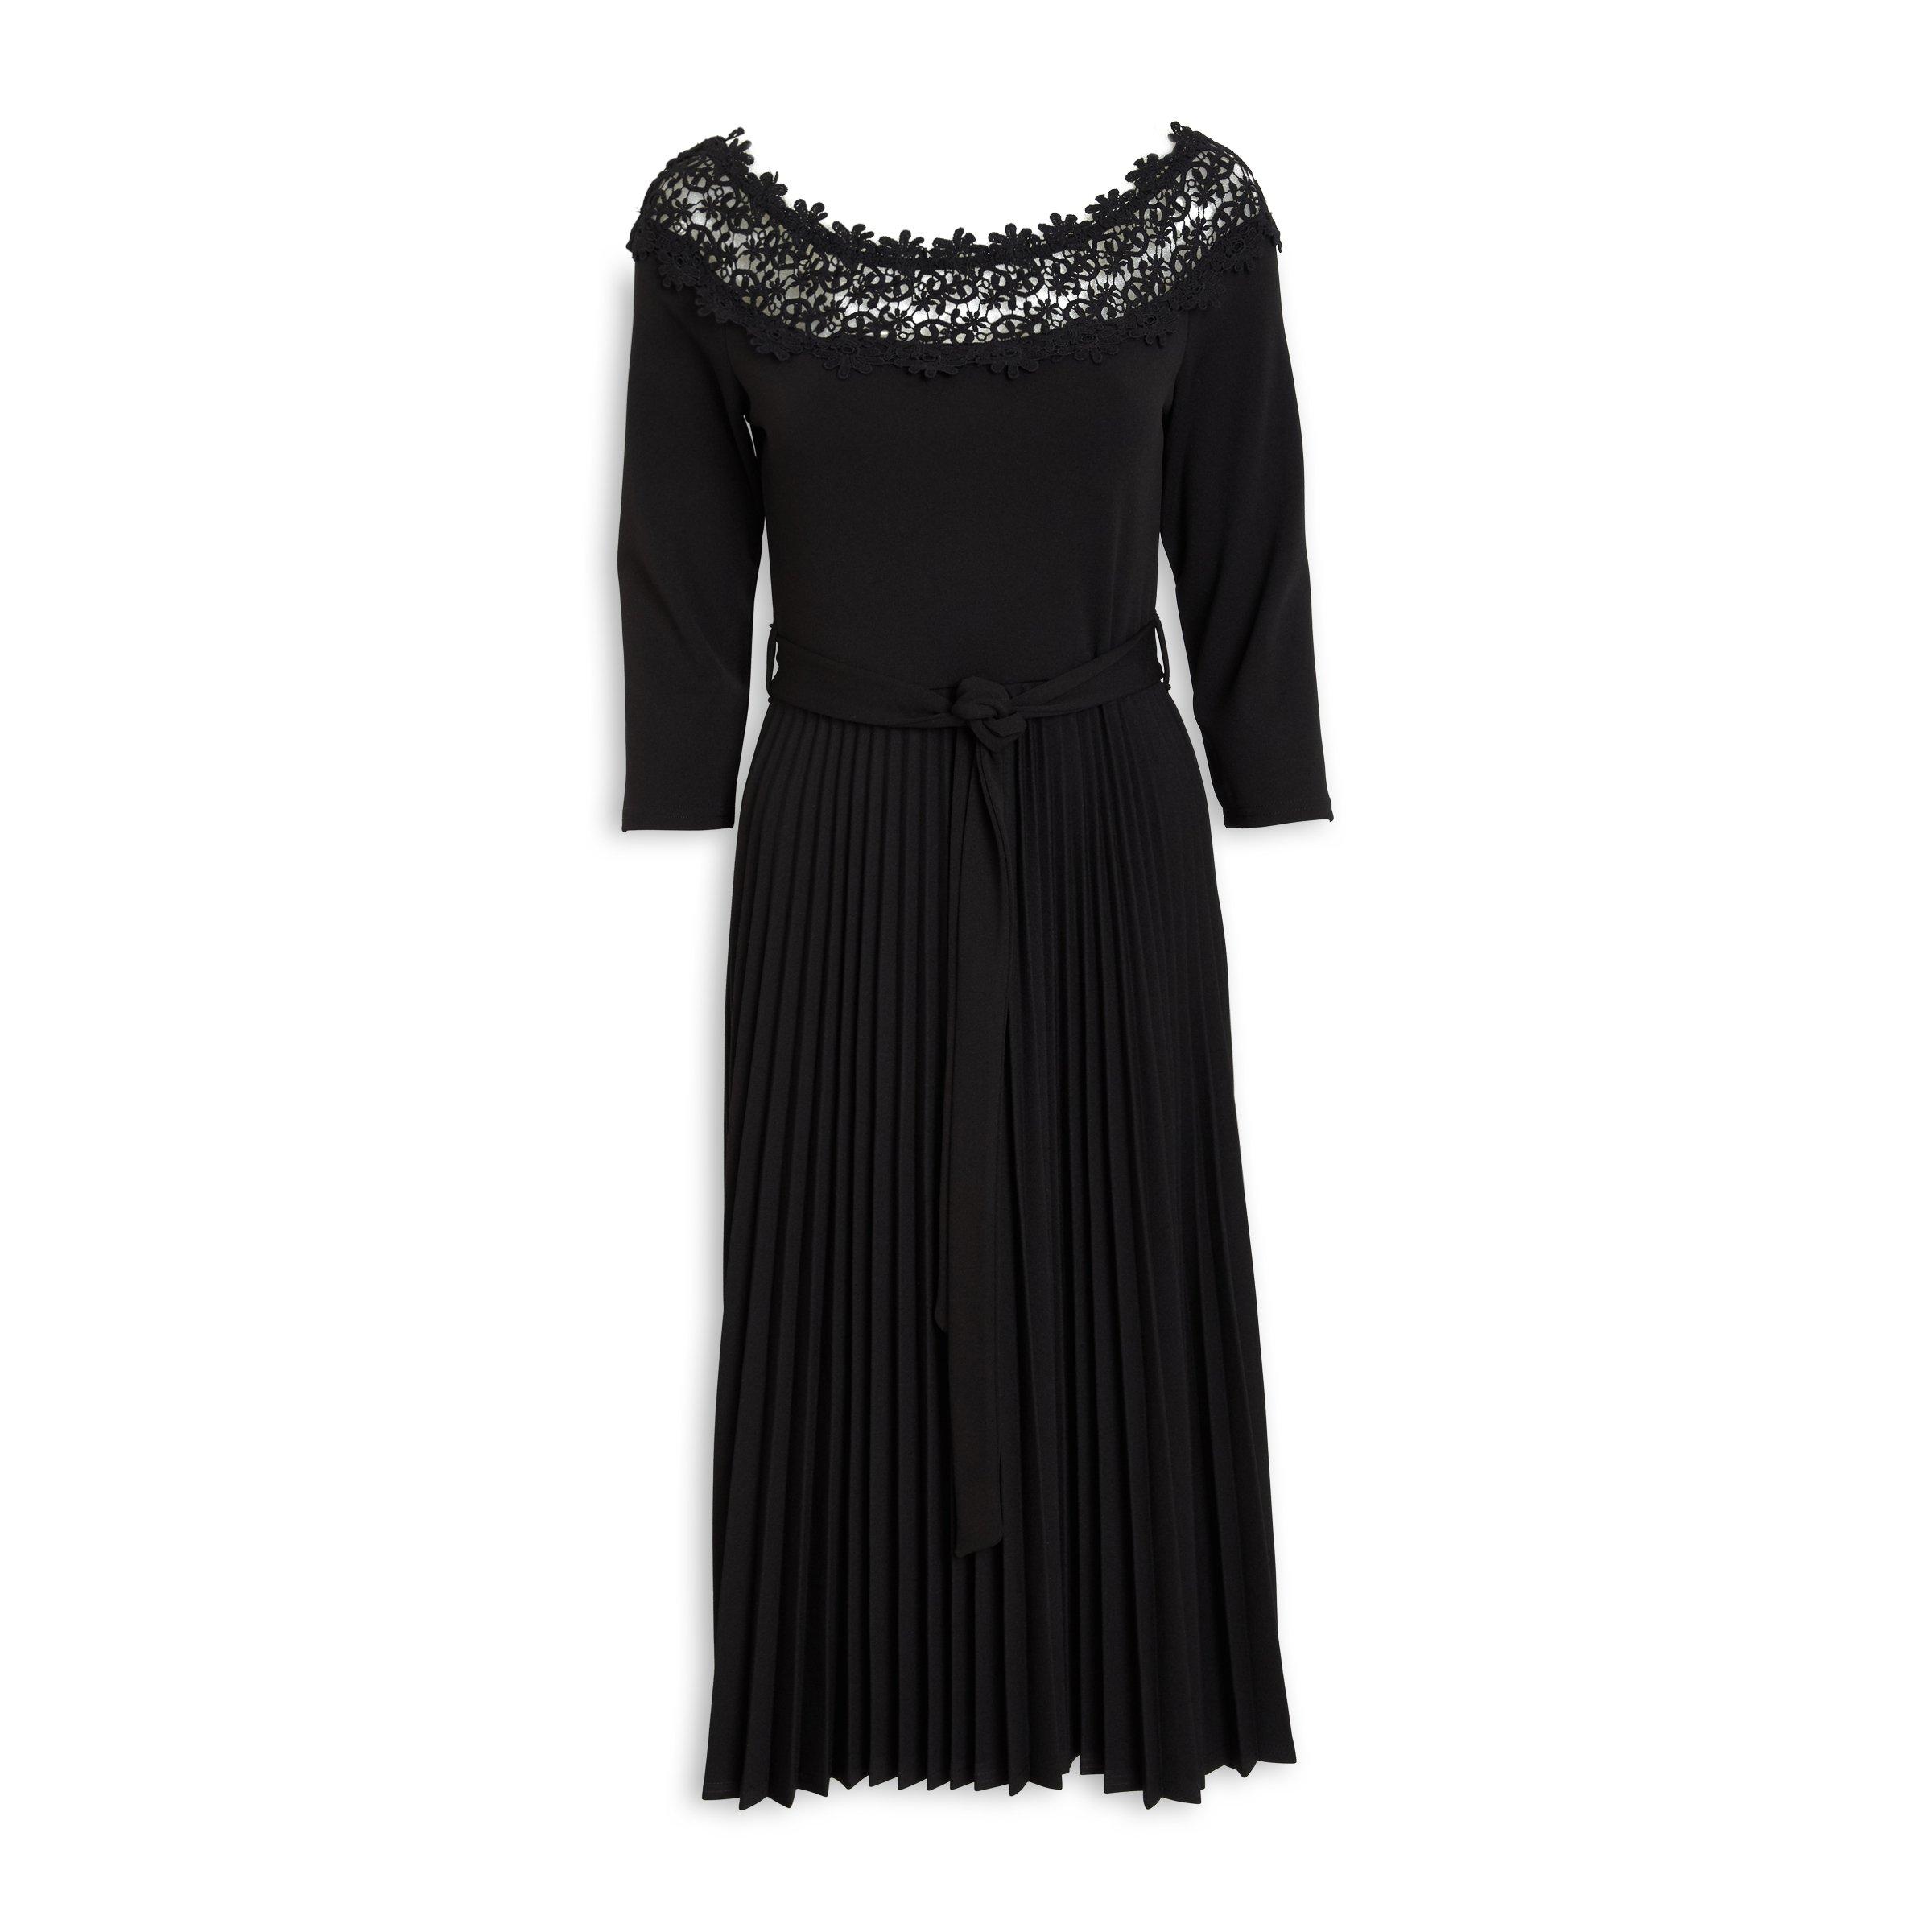 Buy OBR Black Pleated Dress Online | Truworths